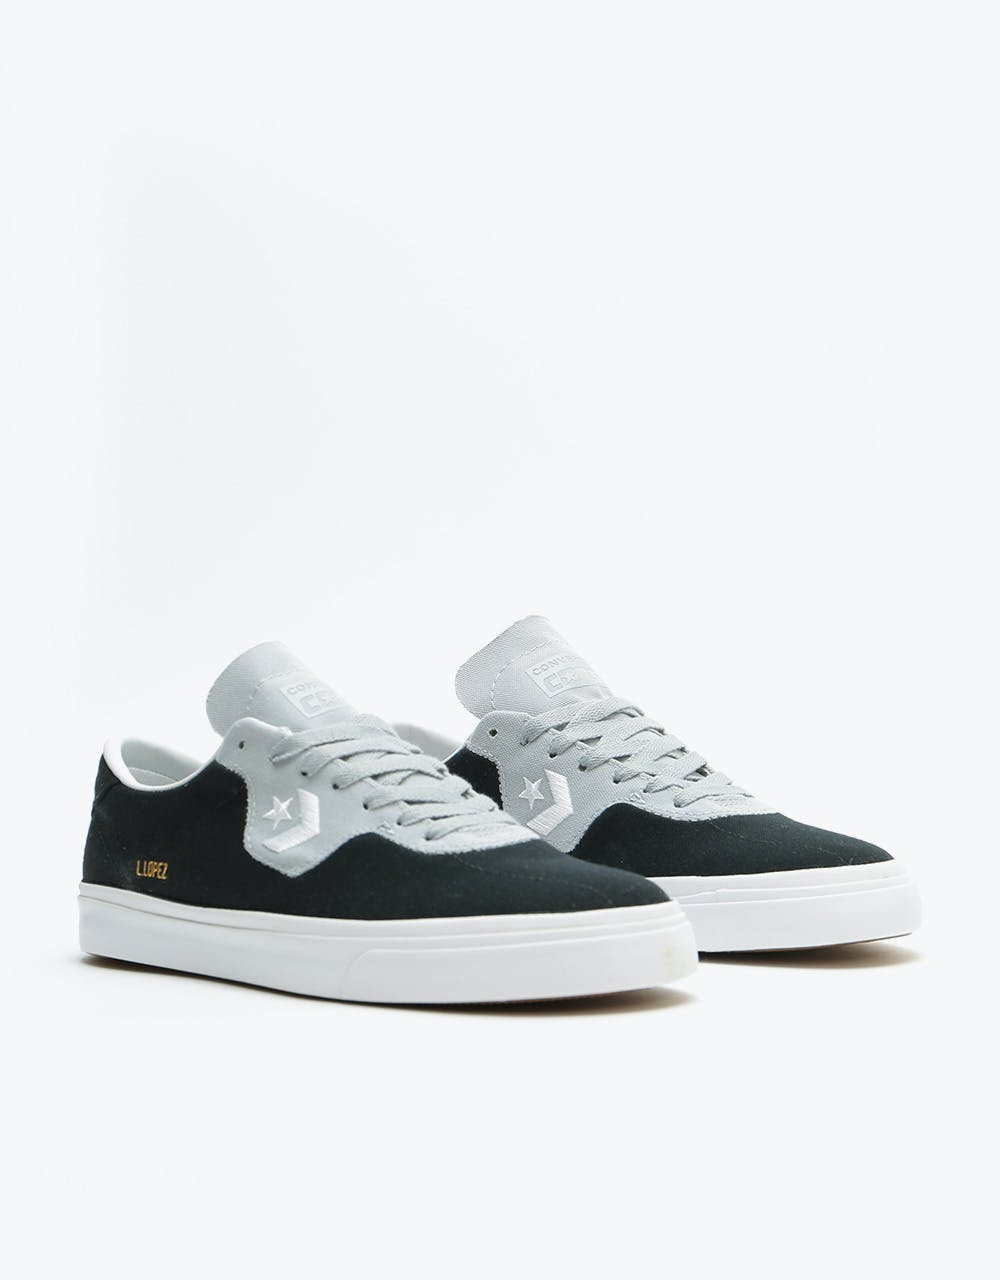 Converse Louie Lopez Pro Ox Skate Shoes - Black/Wolf Grey/White